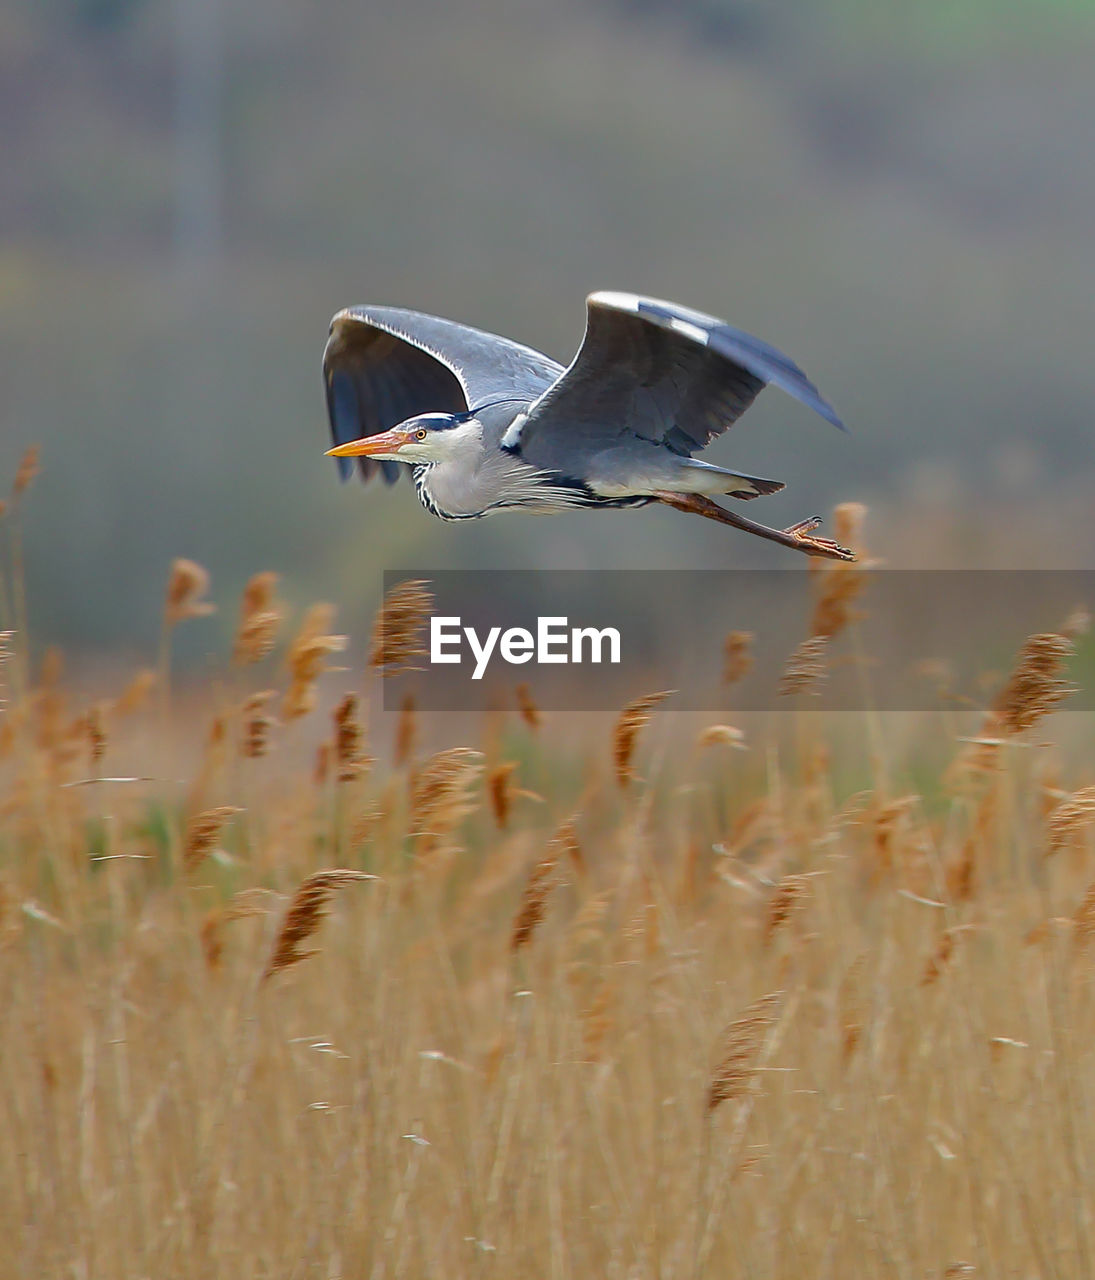 Heron flying over field